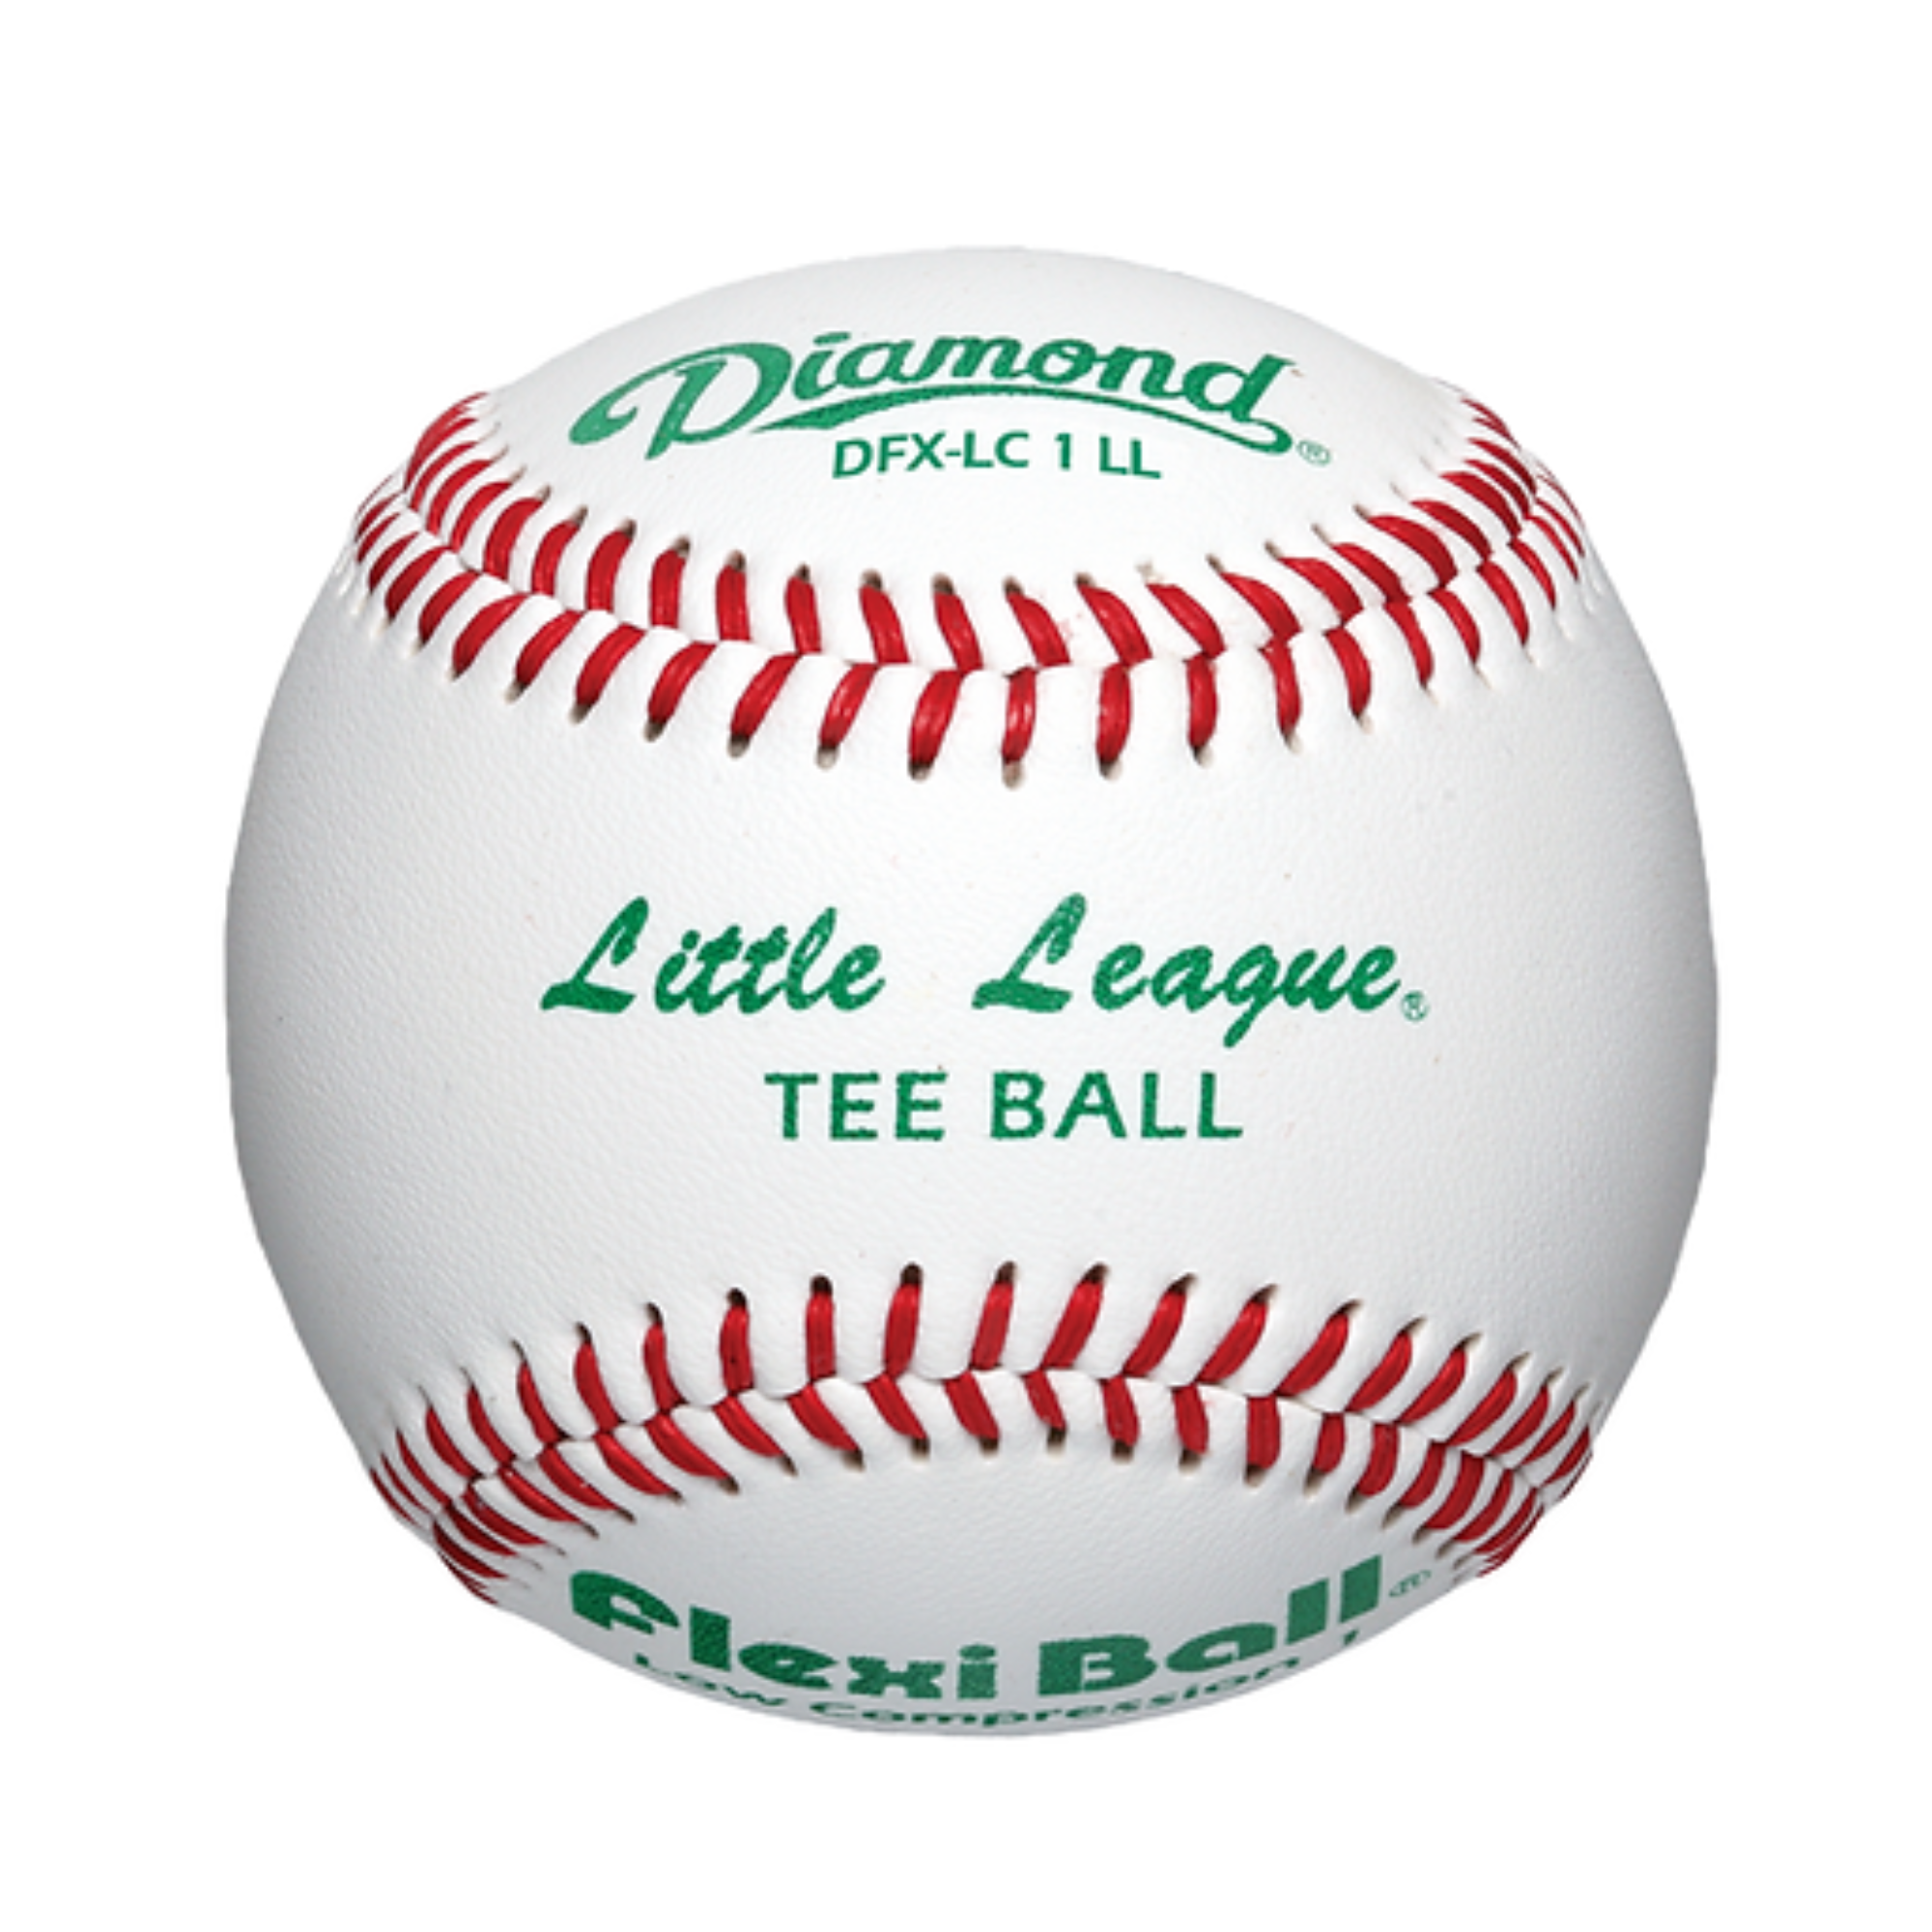 Diamond DFX-LC1 Little League T-Ball INDIVIDUAL